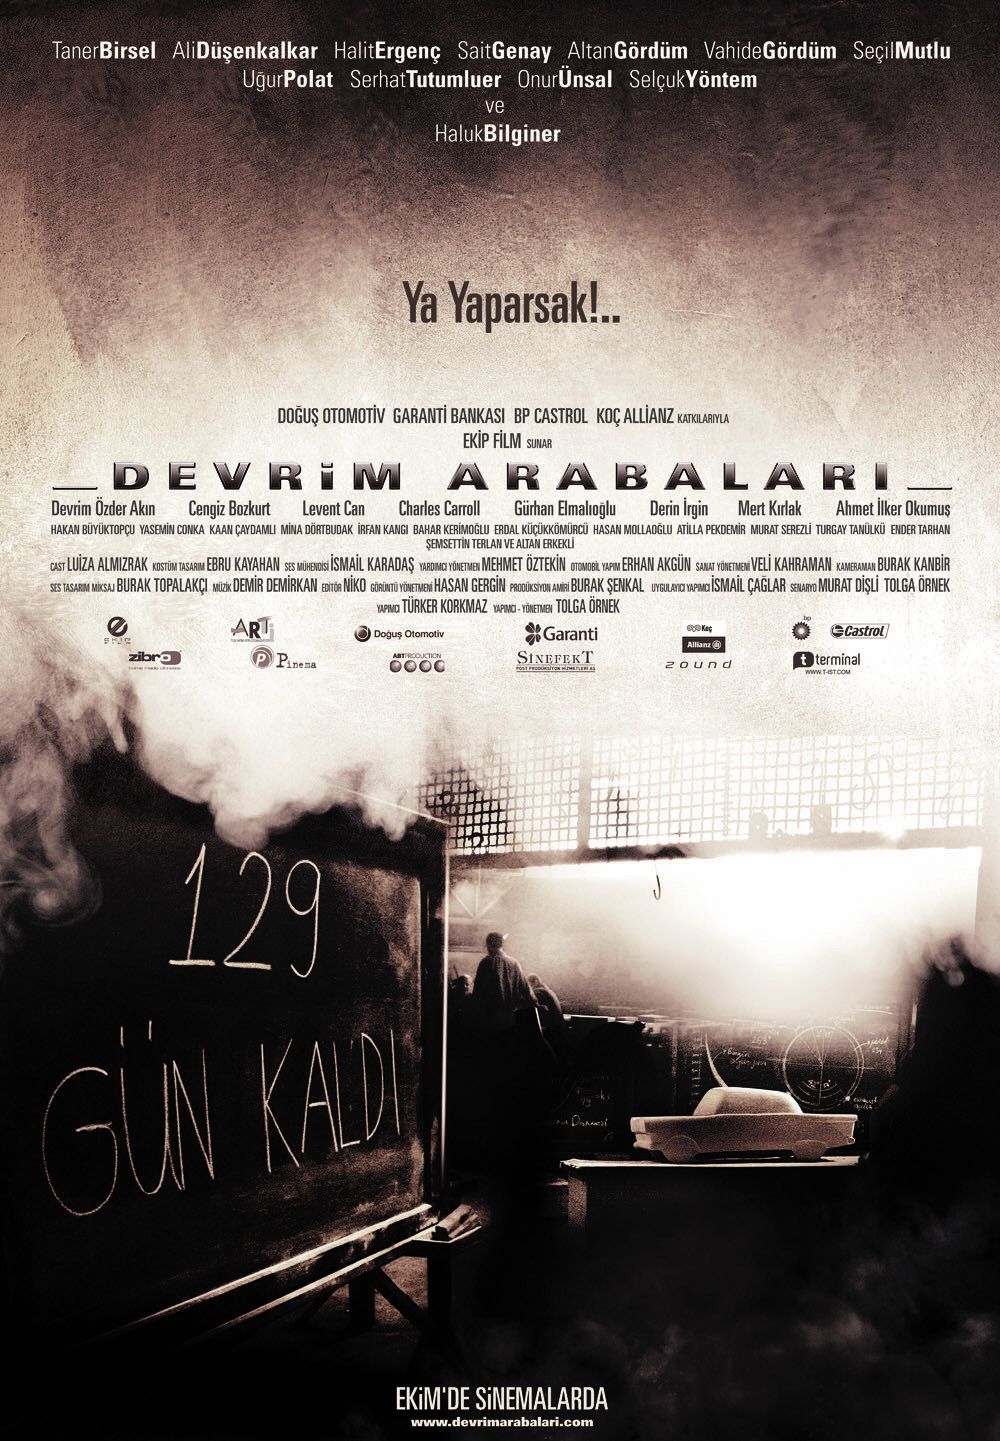 Extra Large Movie Poster Image for Devrim arabalari (#2 of 2)